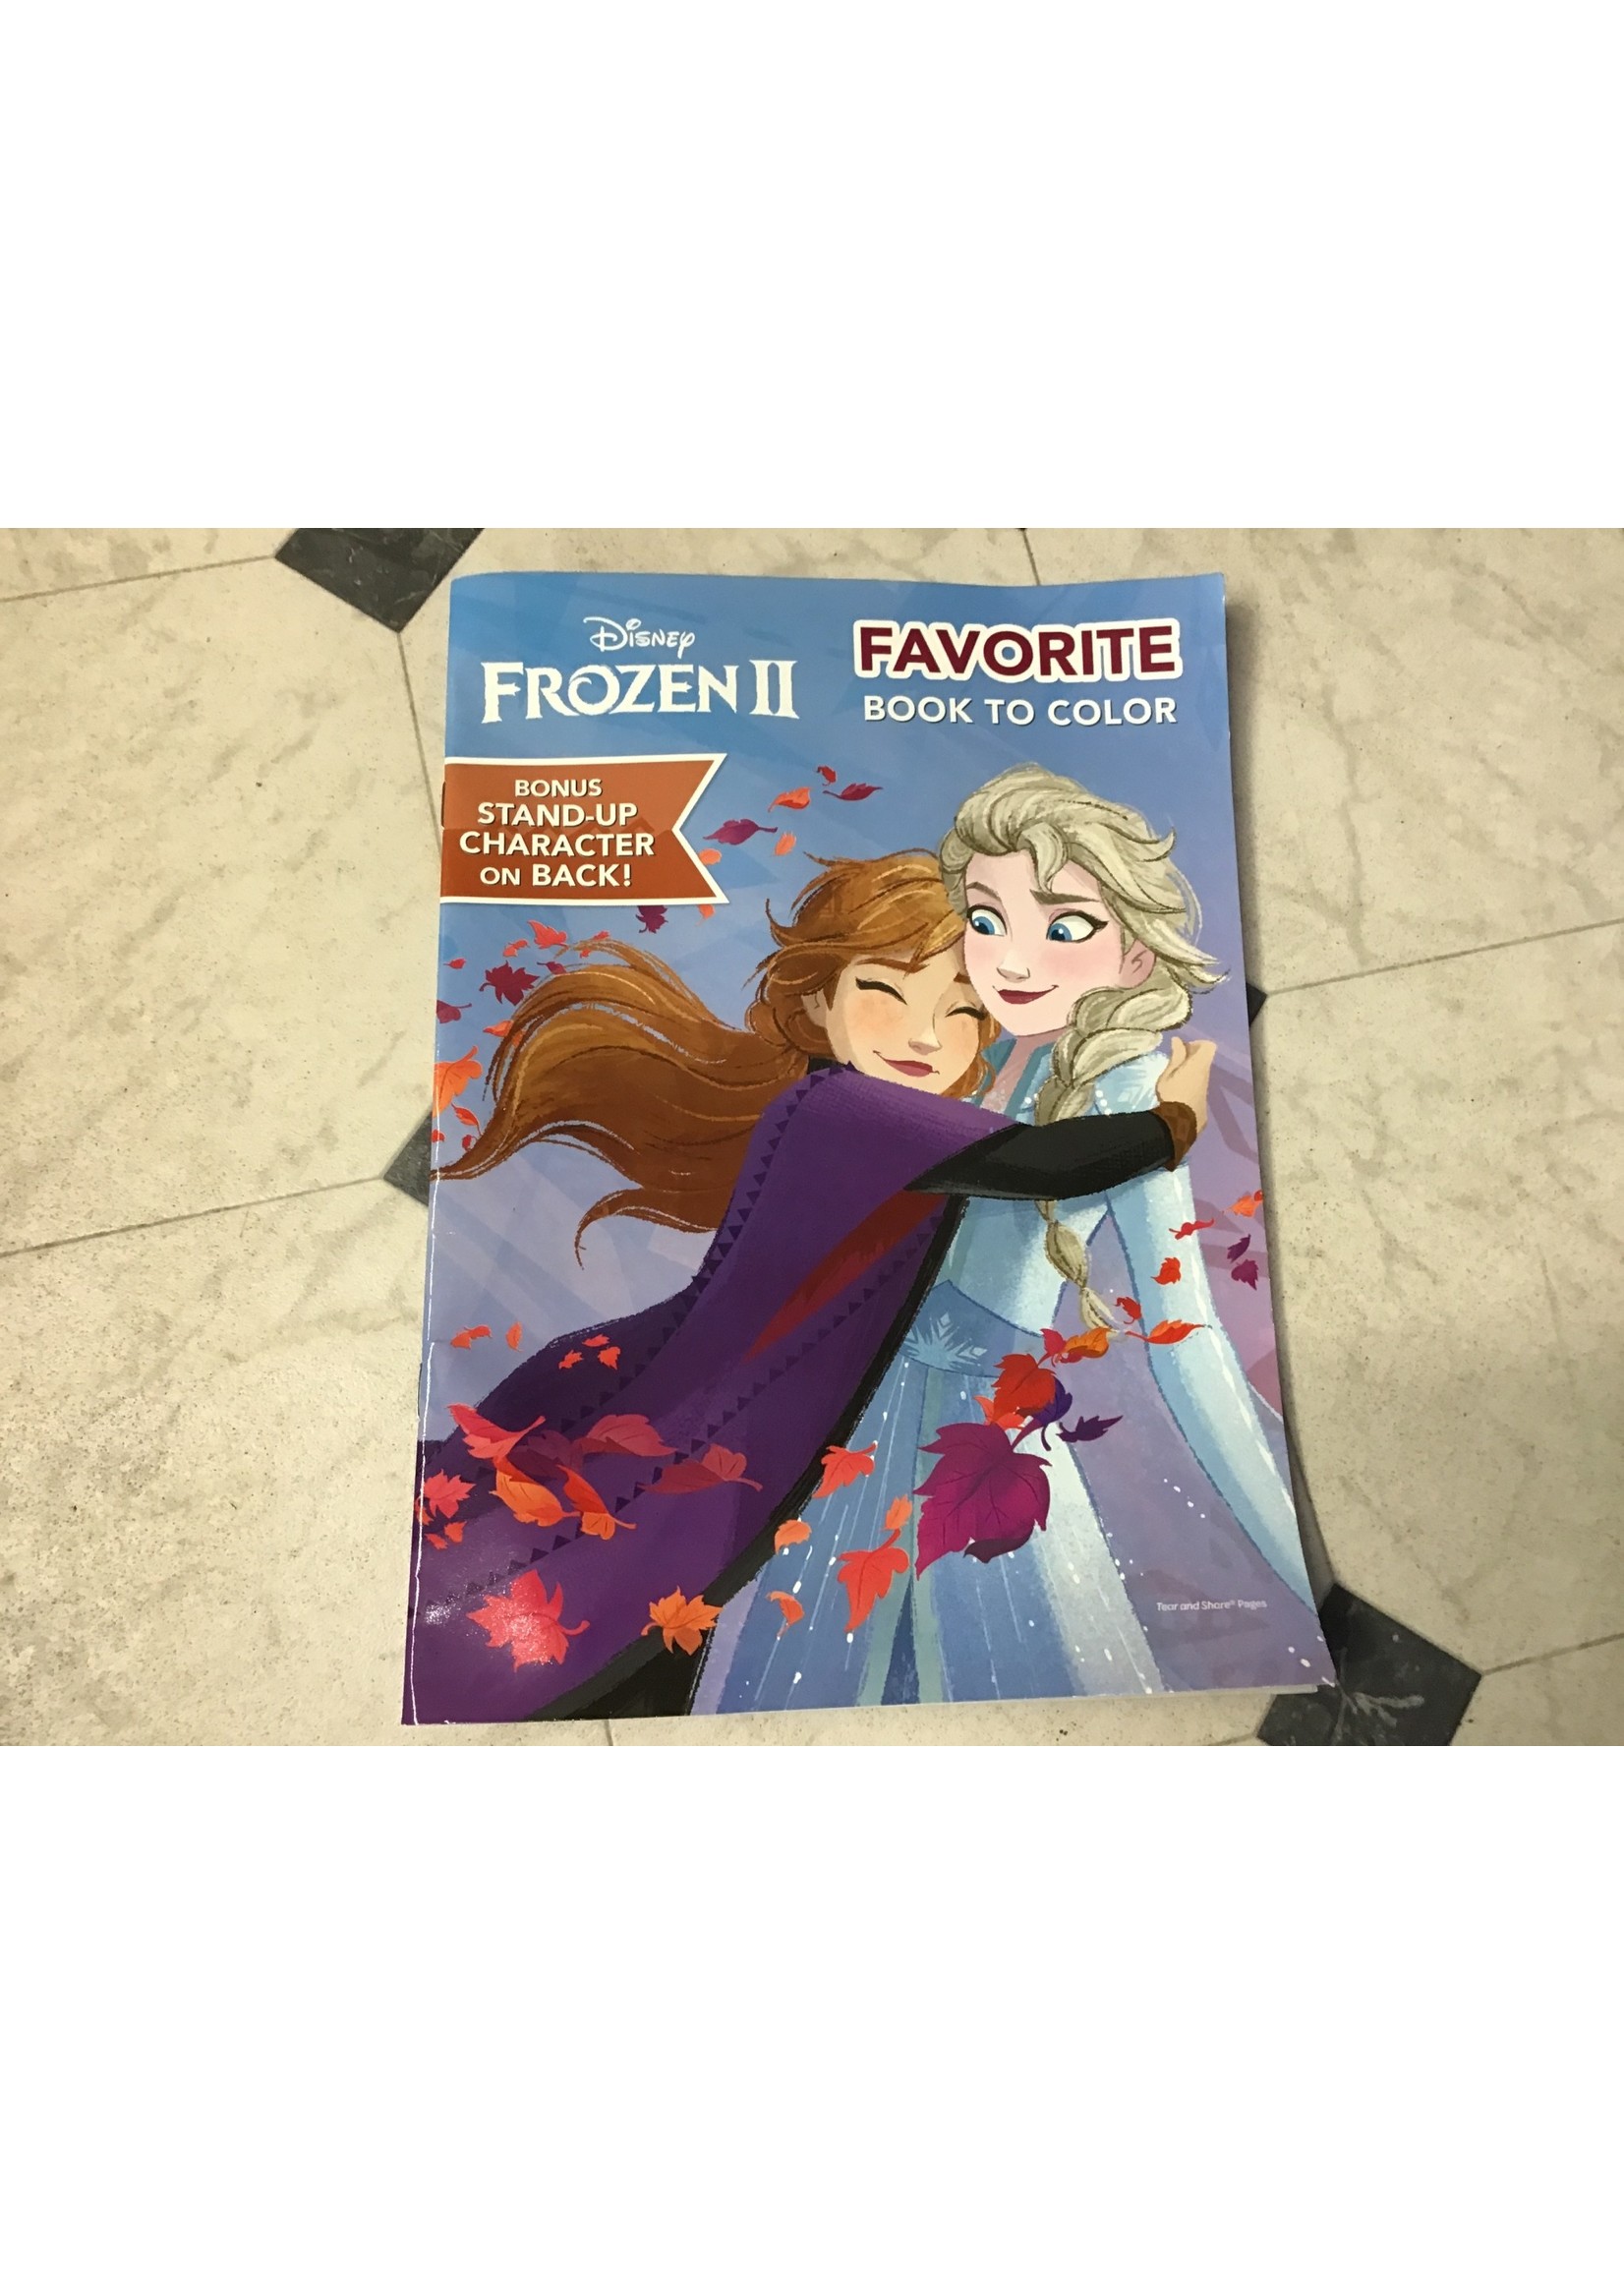 Frozen 2 Favorite Book to Color